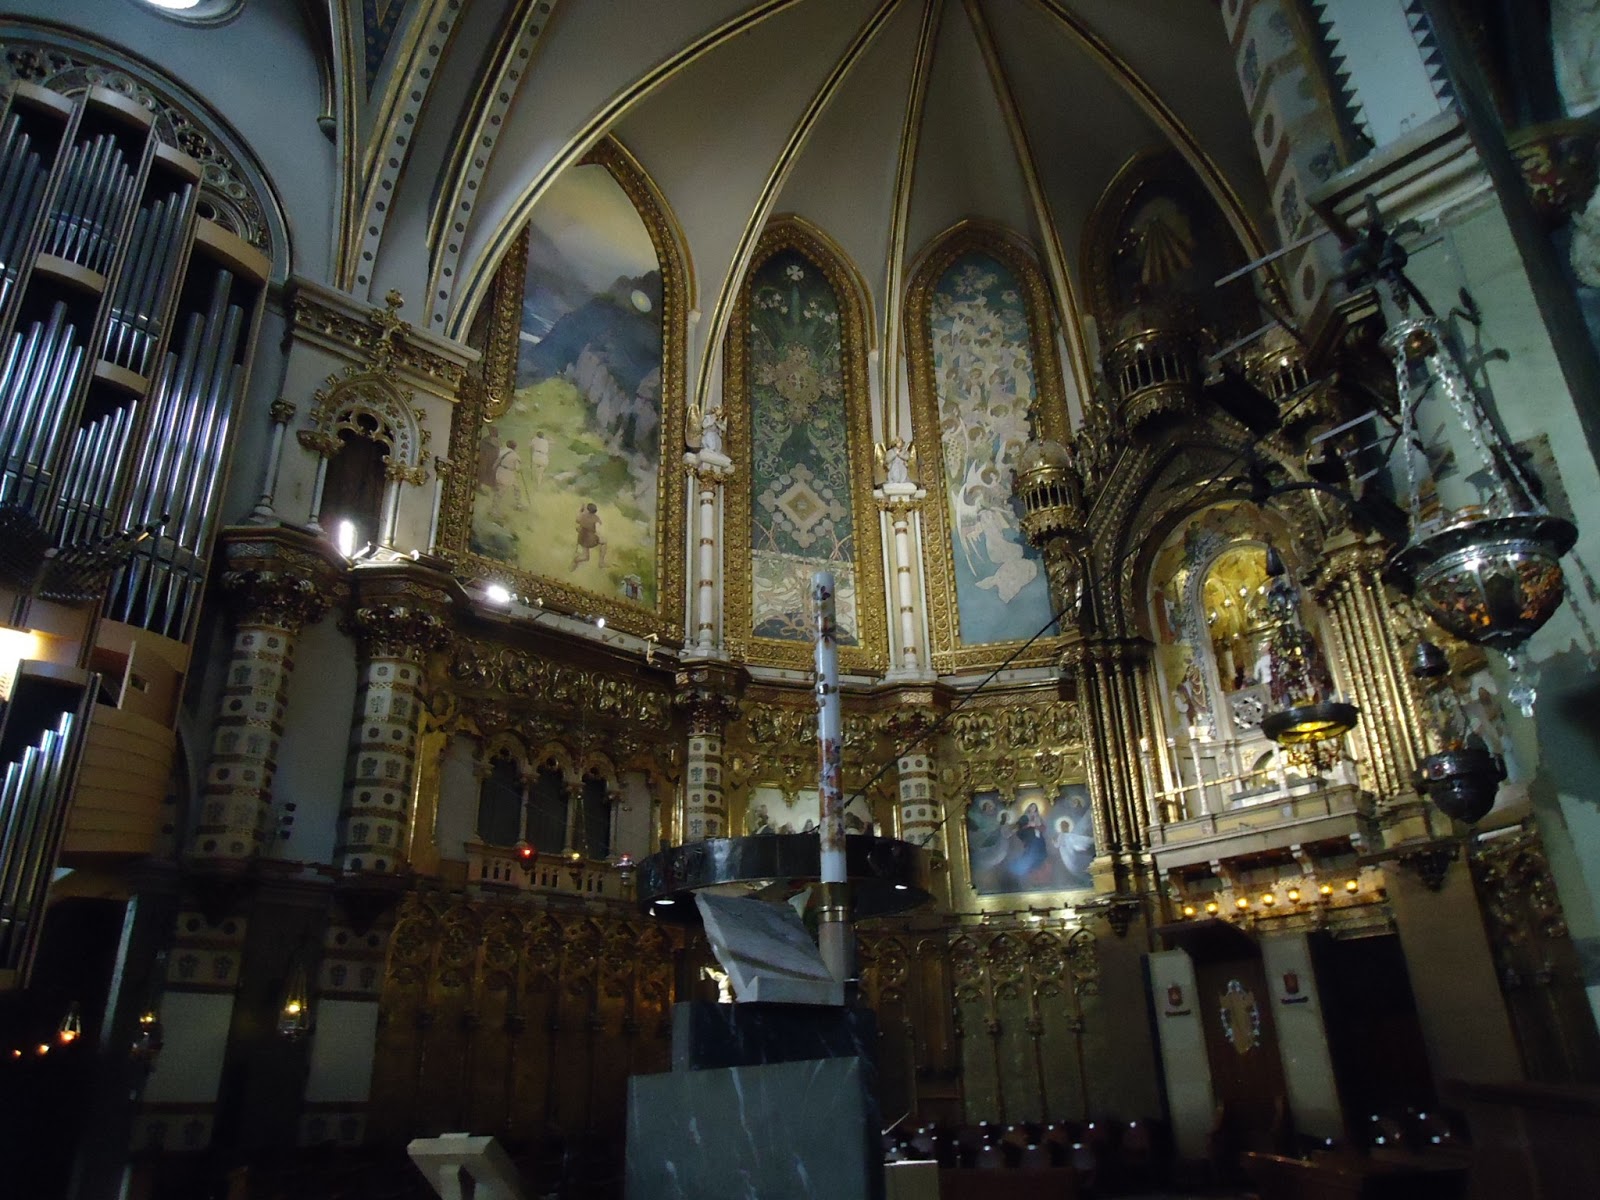 Gargoyles & Graffiti: Montserrat Cathedral: Another Gargoyle Heaven